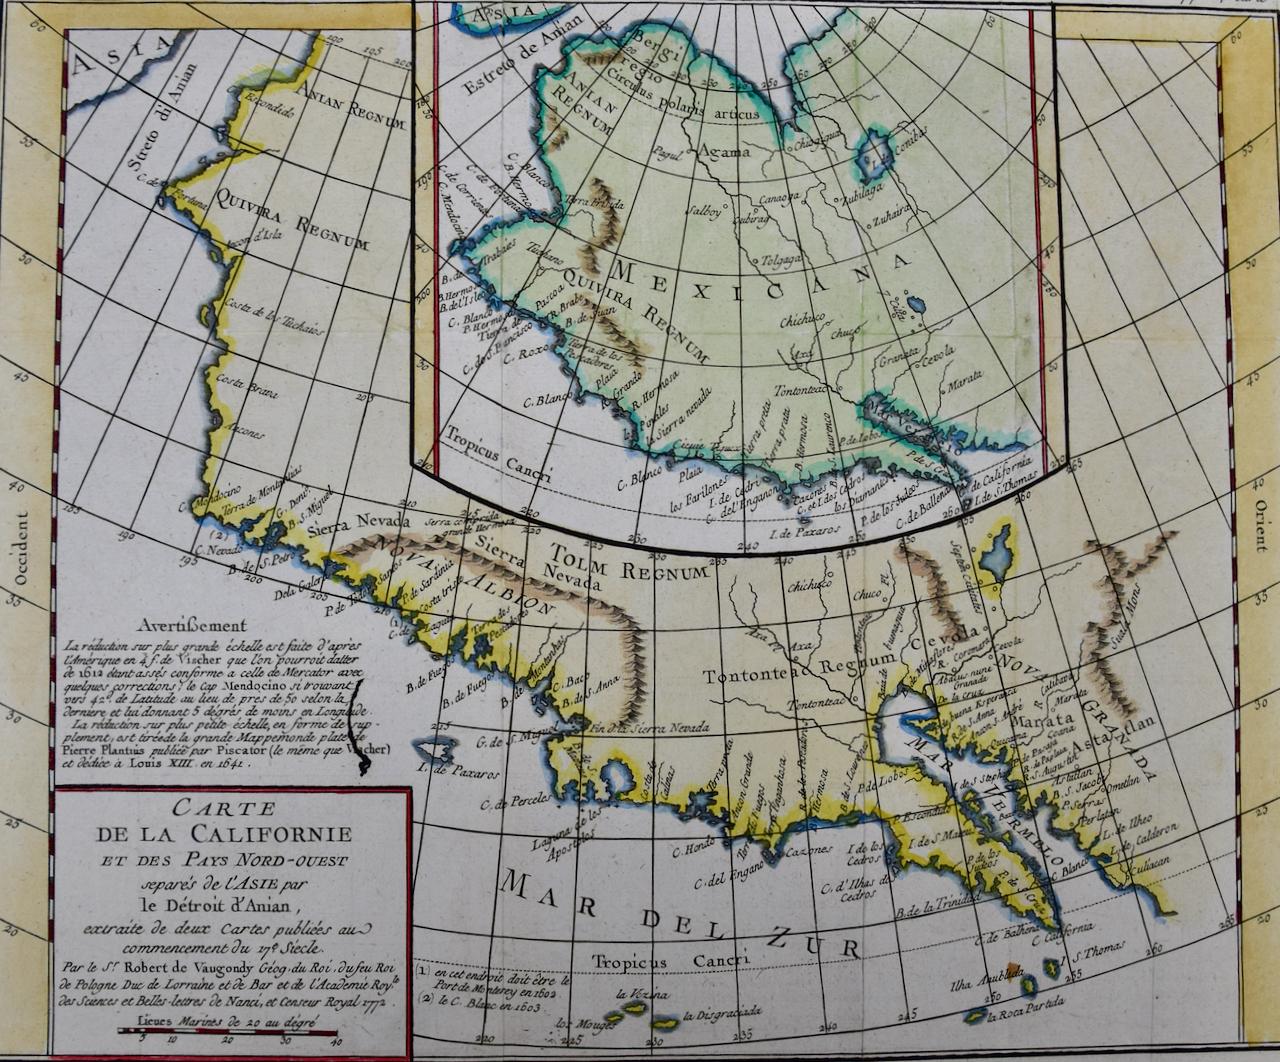 California: 18th Century Hand-colored Map by de Vaugondy  - Print by Didier Robert de Vaugondy